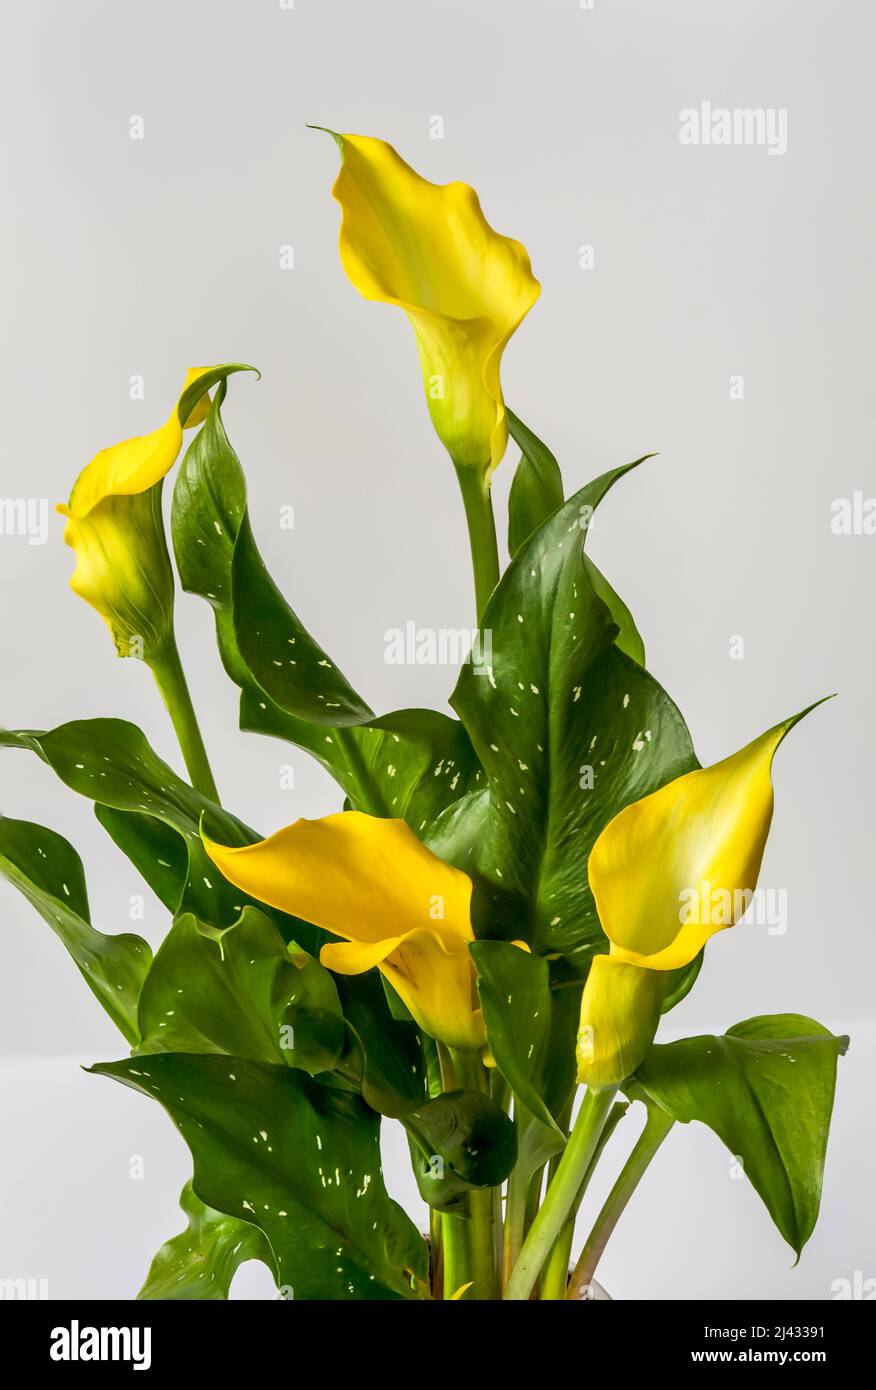 Speckled yellow flower and leaves fotografías e imágenes de alta resolución  - Alamy